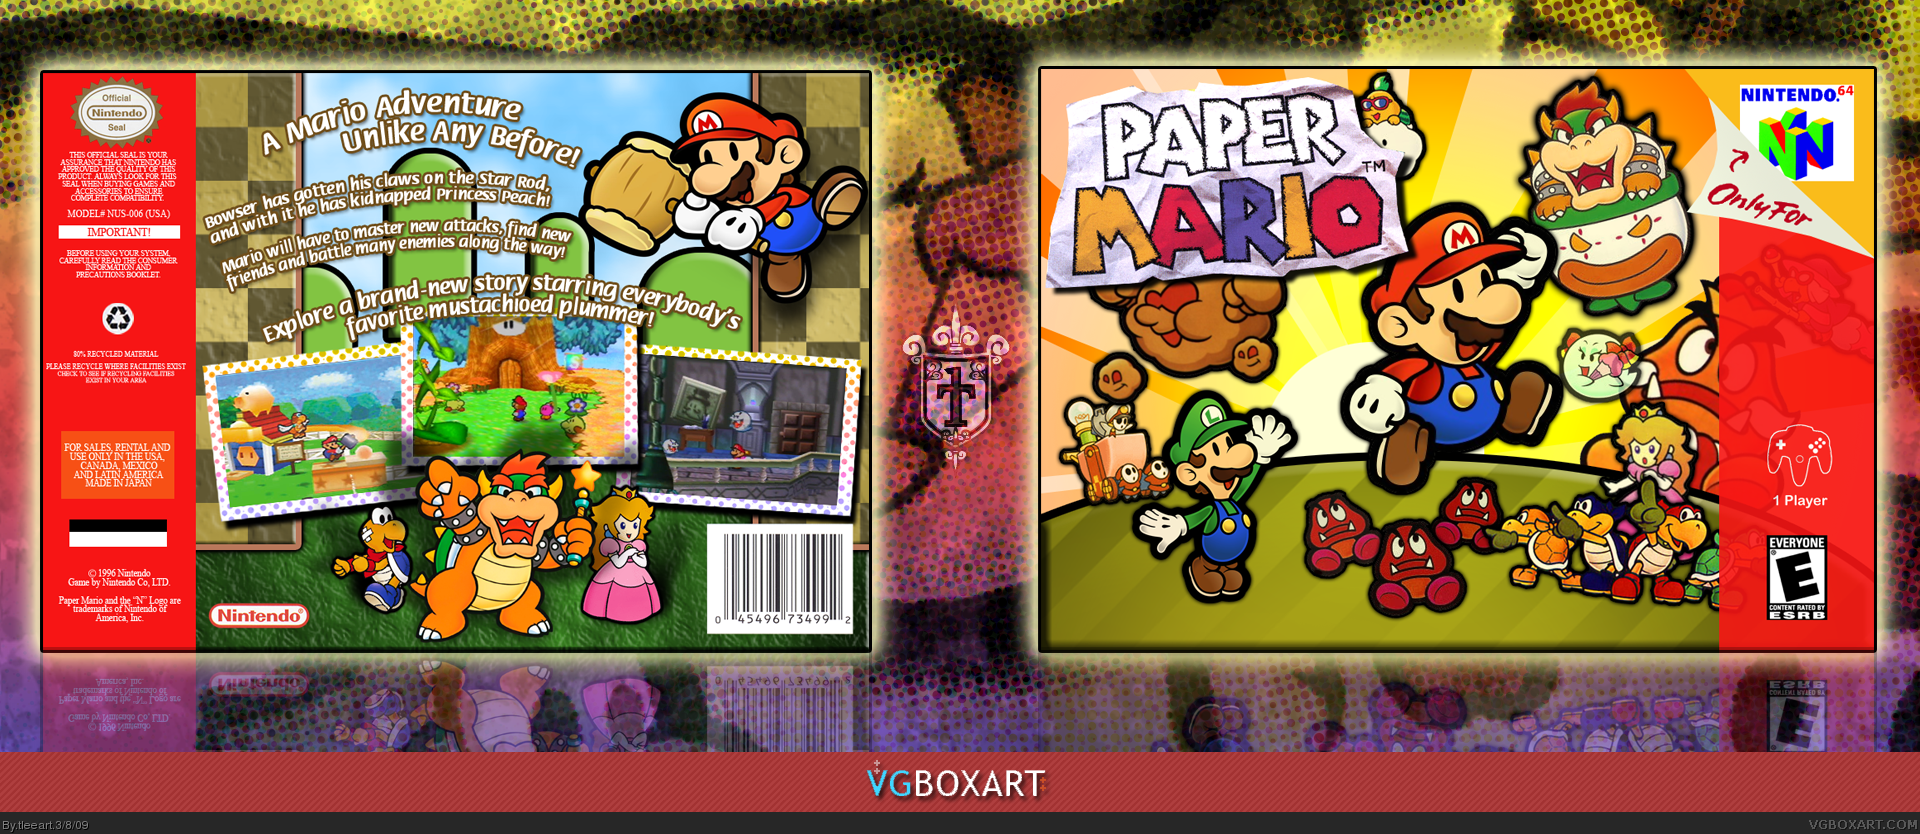 Paper Mario n64. Paper Mario обложка. Paper Mario GAMECUBE обложка. Пейпер Марио на Нинтендо 64.